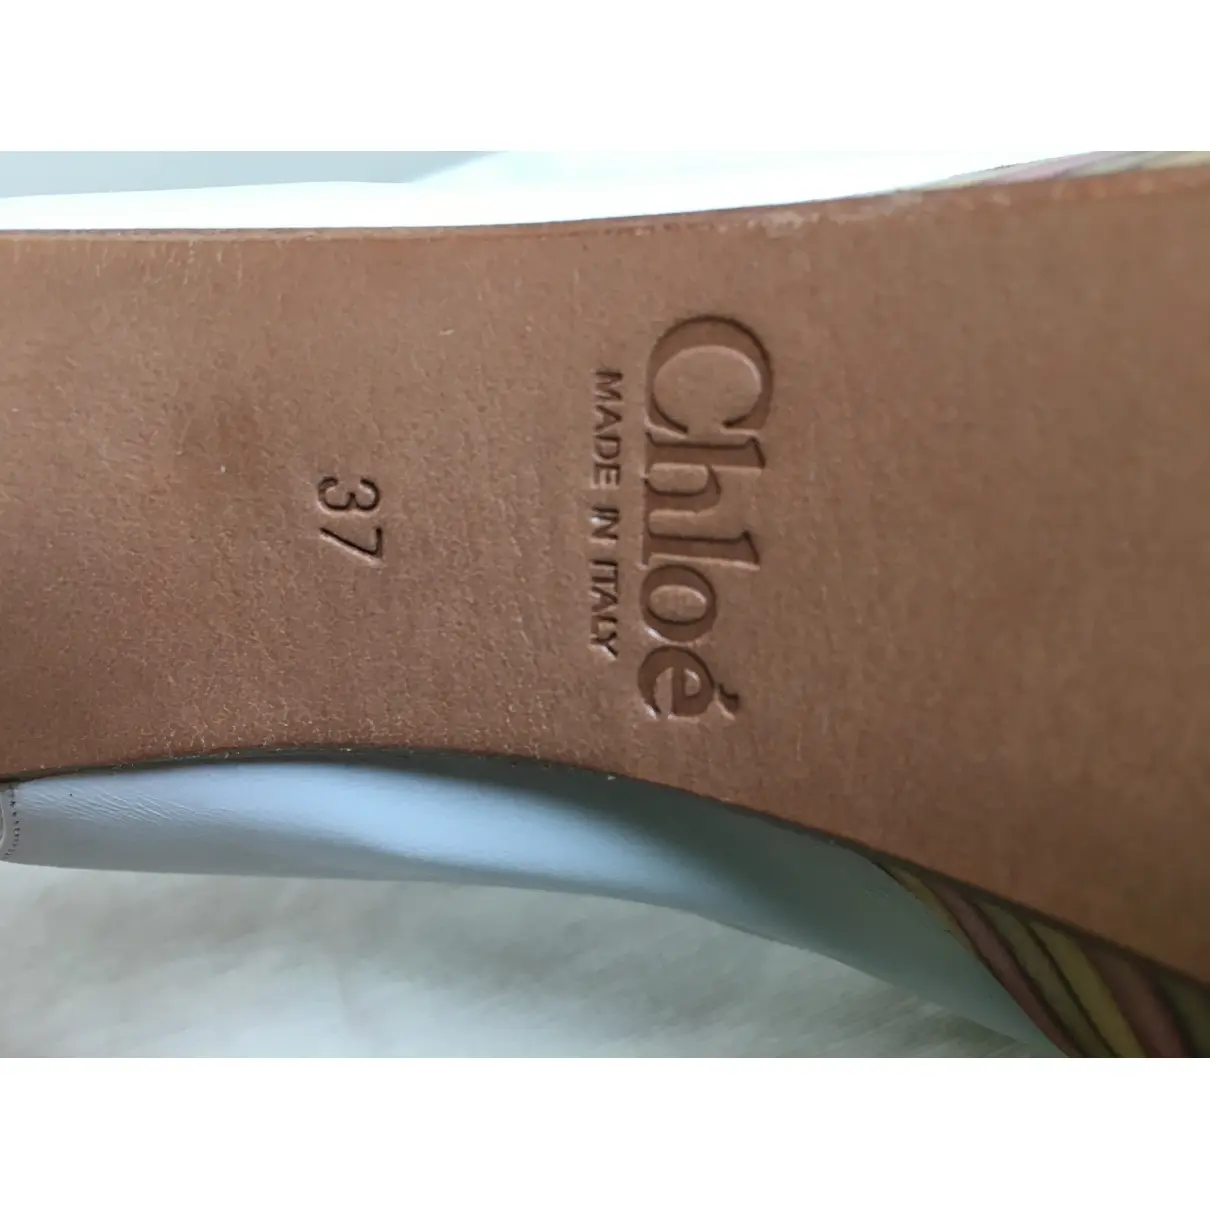 Leather heels Chloé